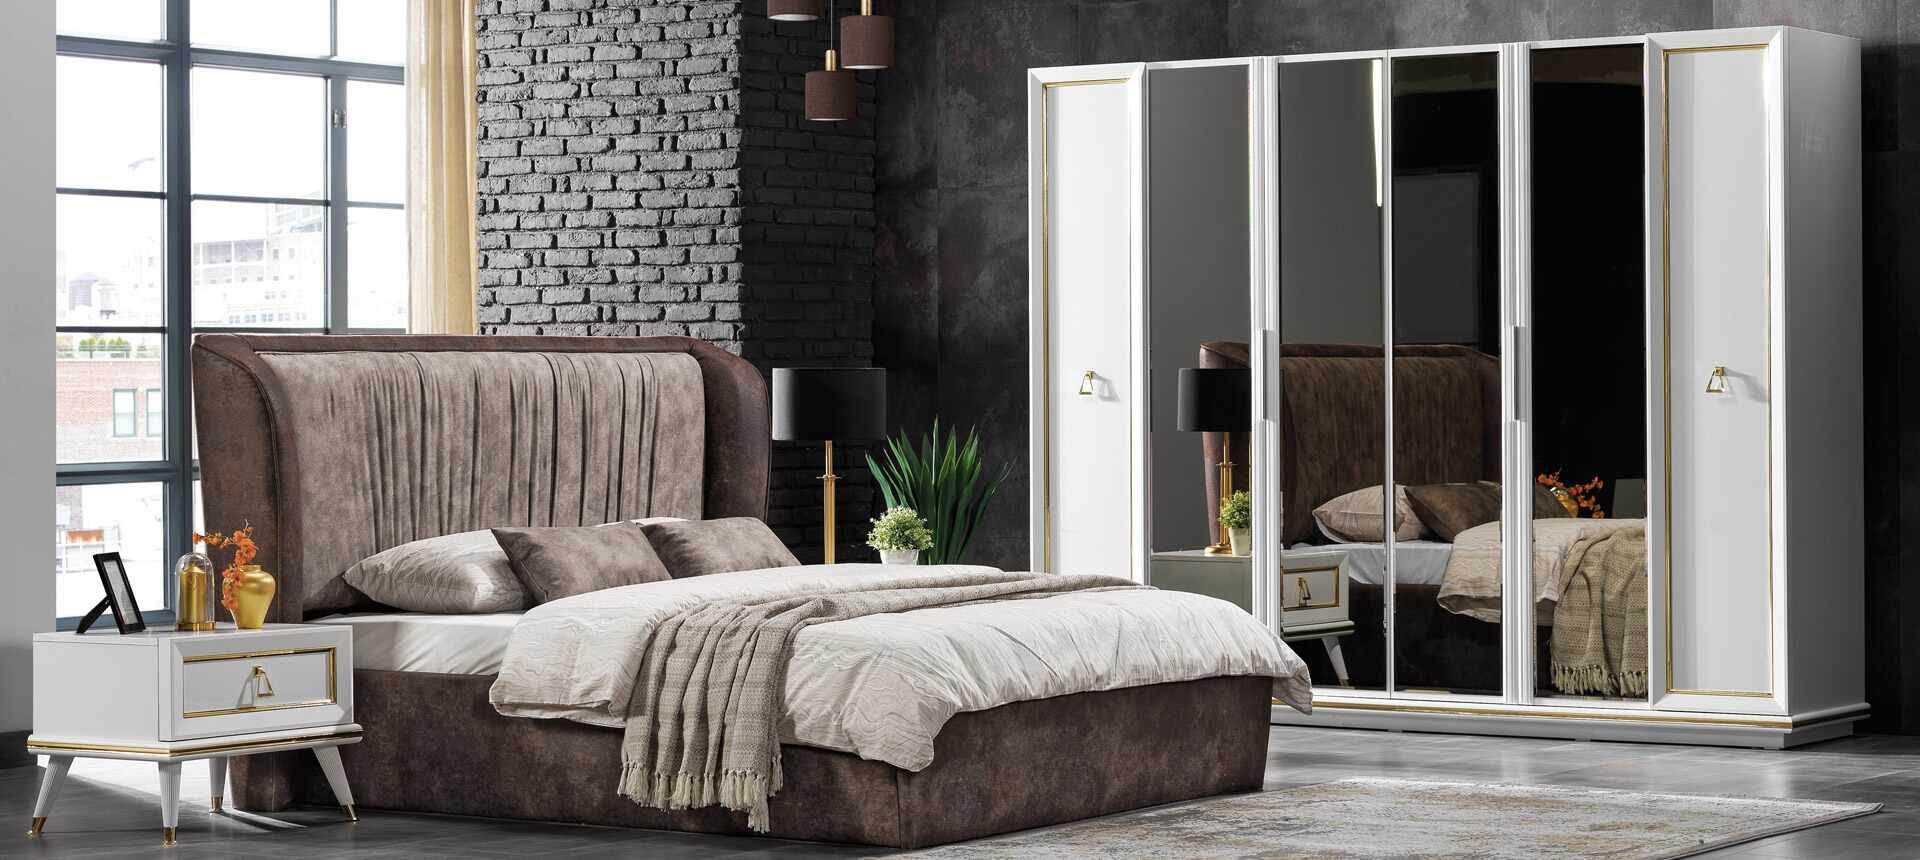 Set mobila dormitor din pal si metal, cu pat 200 x 160 cm, 6 piese Toscana Alb / Auriu